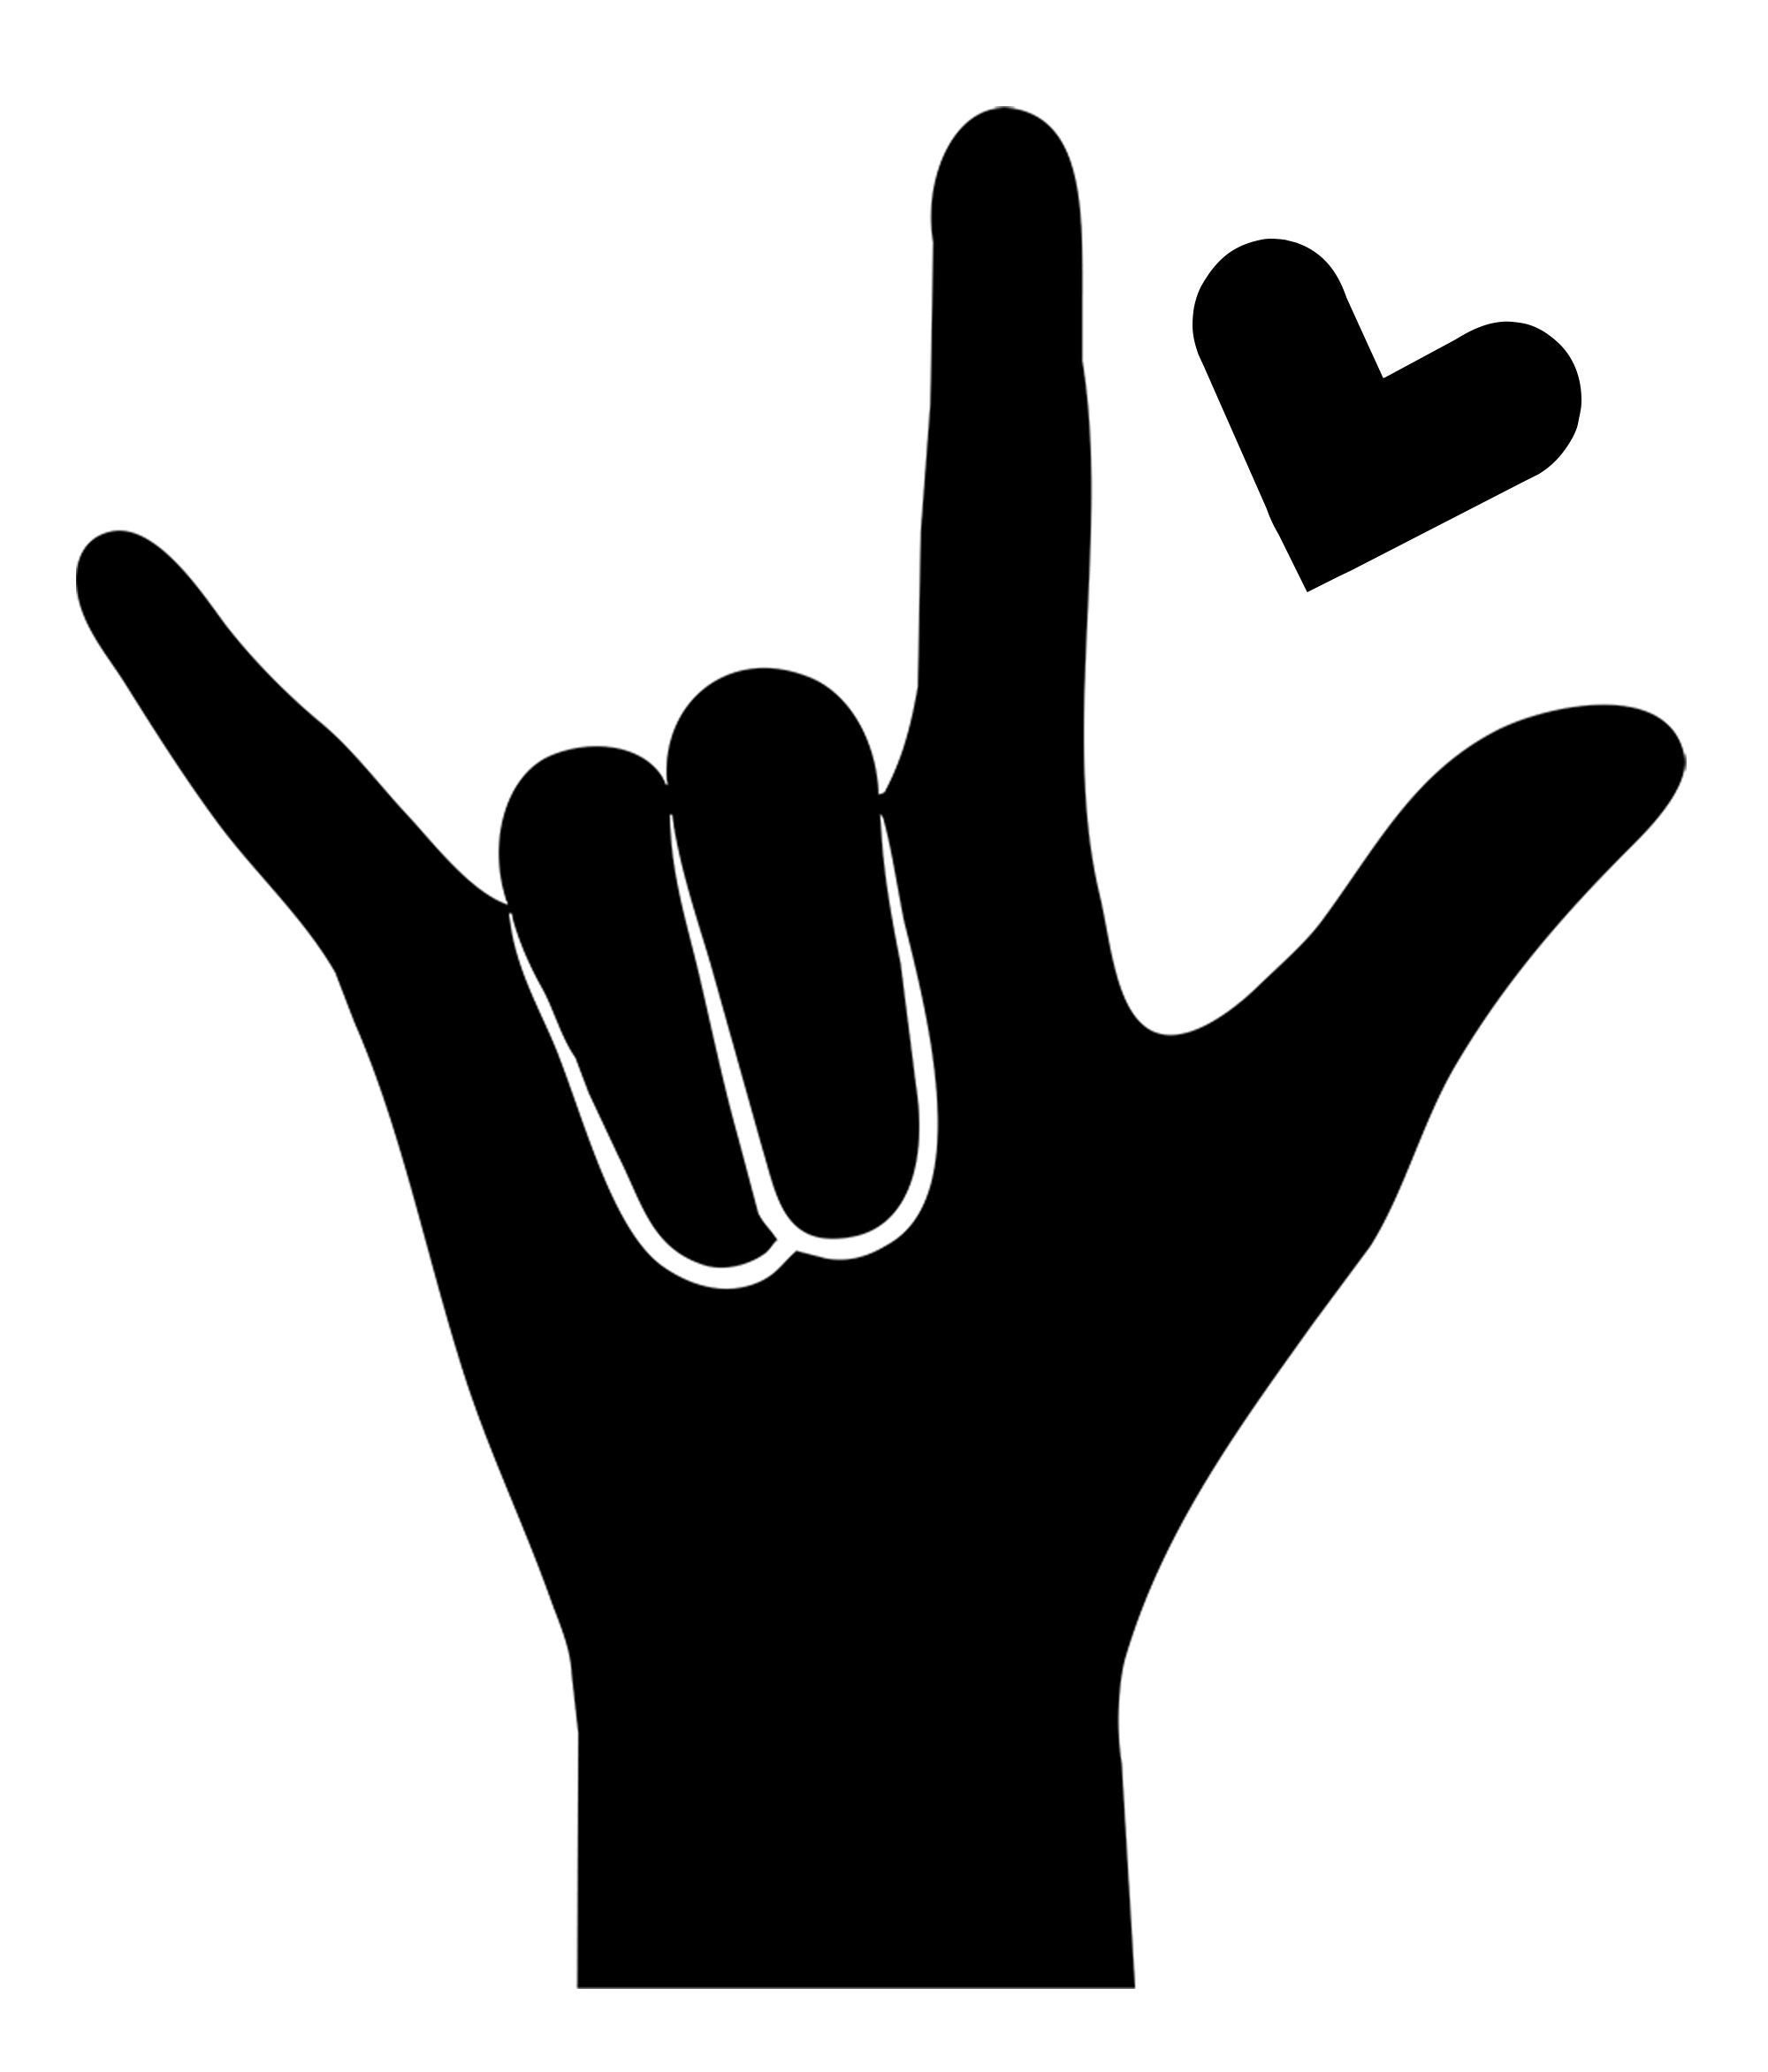 I love you sign language SVG | Etsy